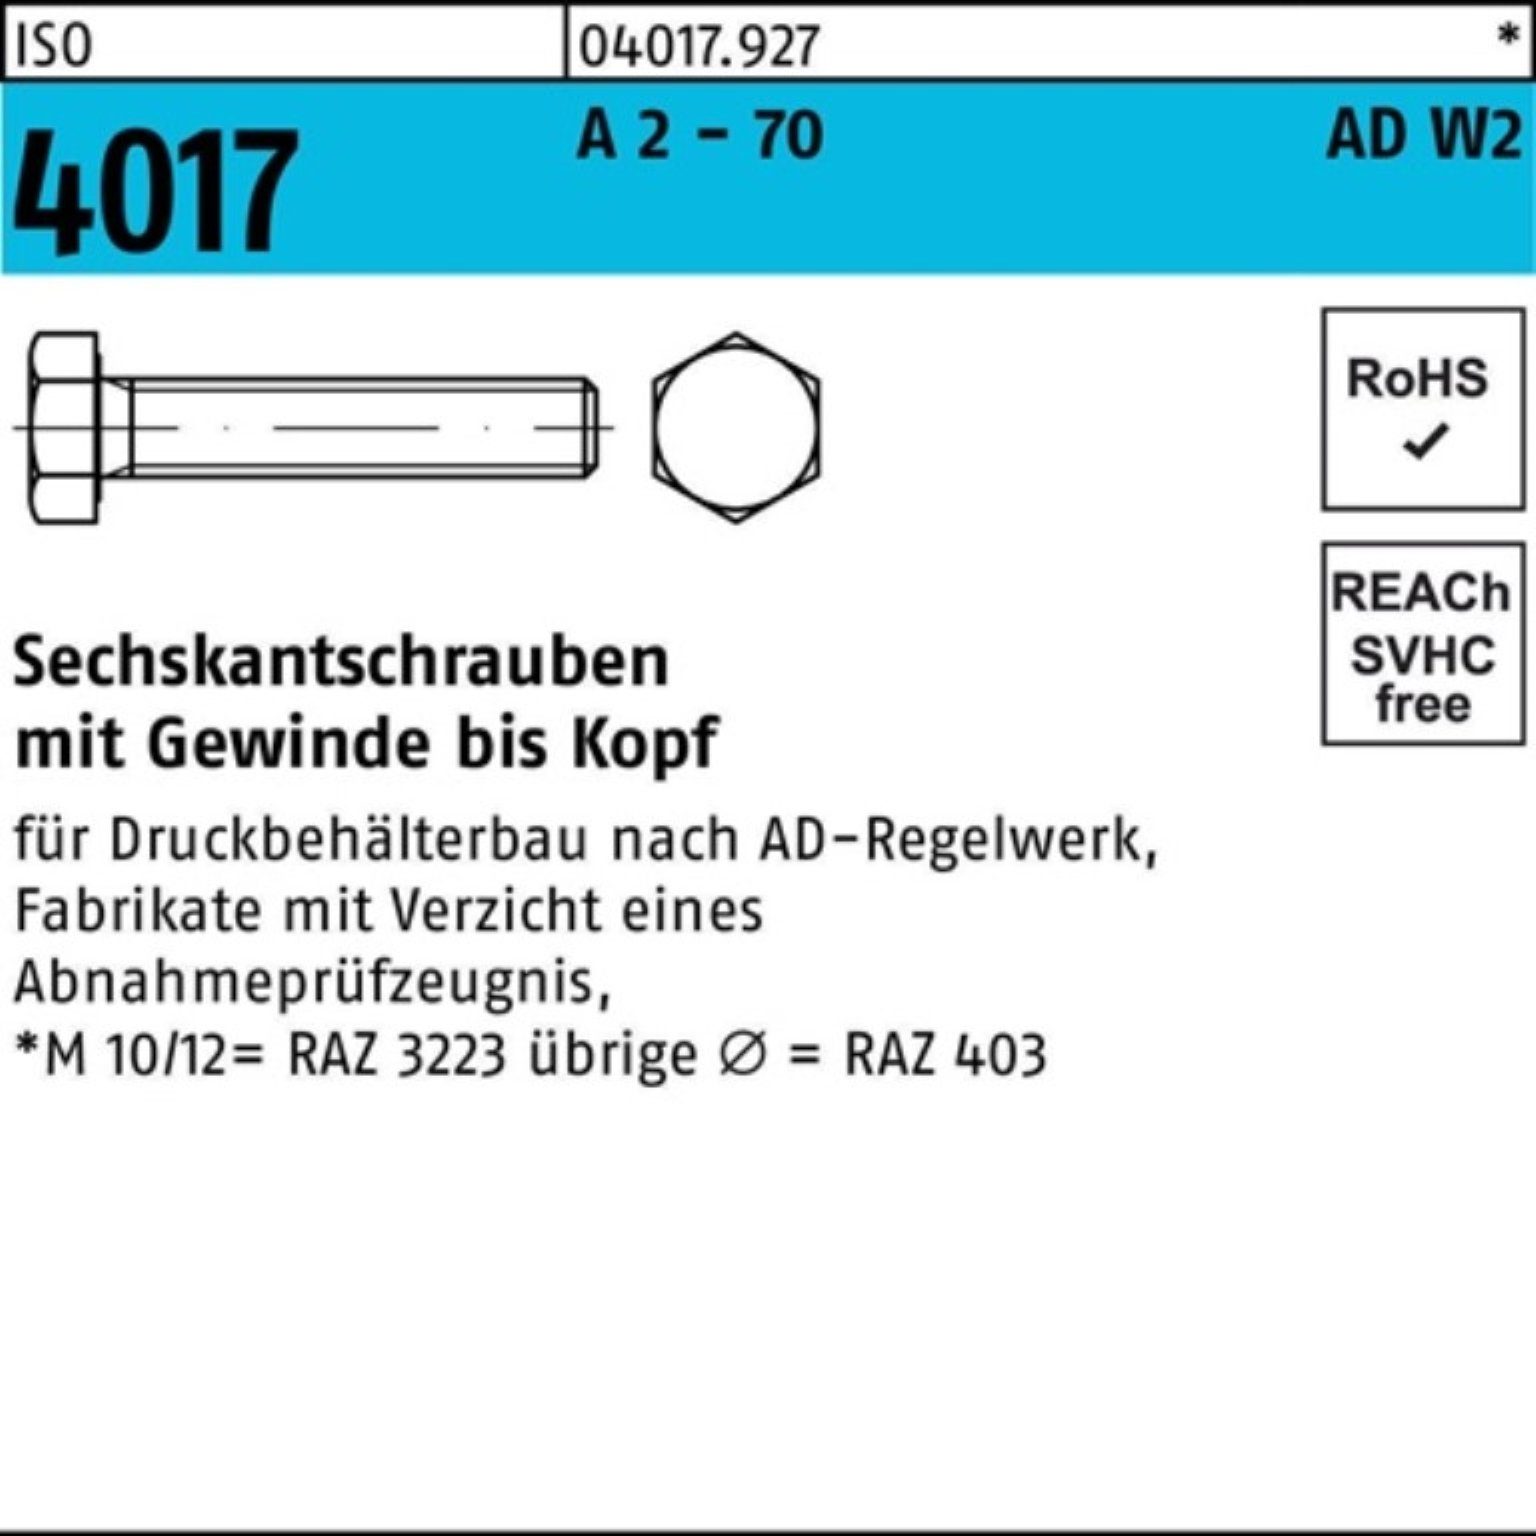 Bufab Sechskantschraube 100er Pack Sechskantschraube ISO 4017 VG M20x 40 A 2 - 70 AD-W2 25 St